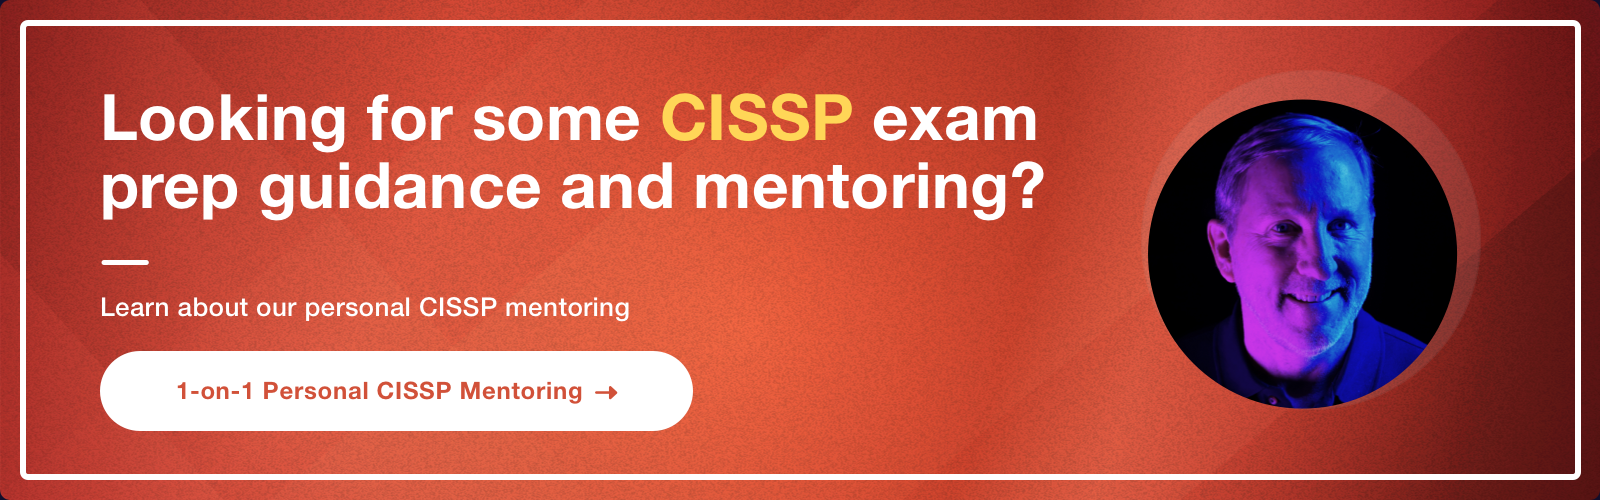 Personal CISSP Mentoring call ad - Destination Certification